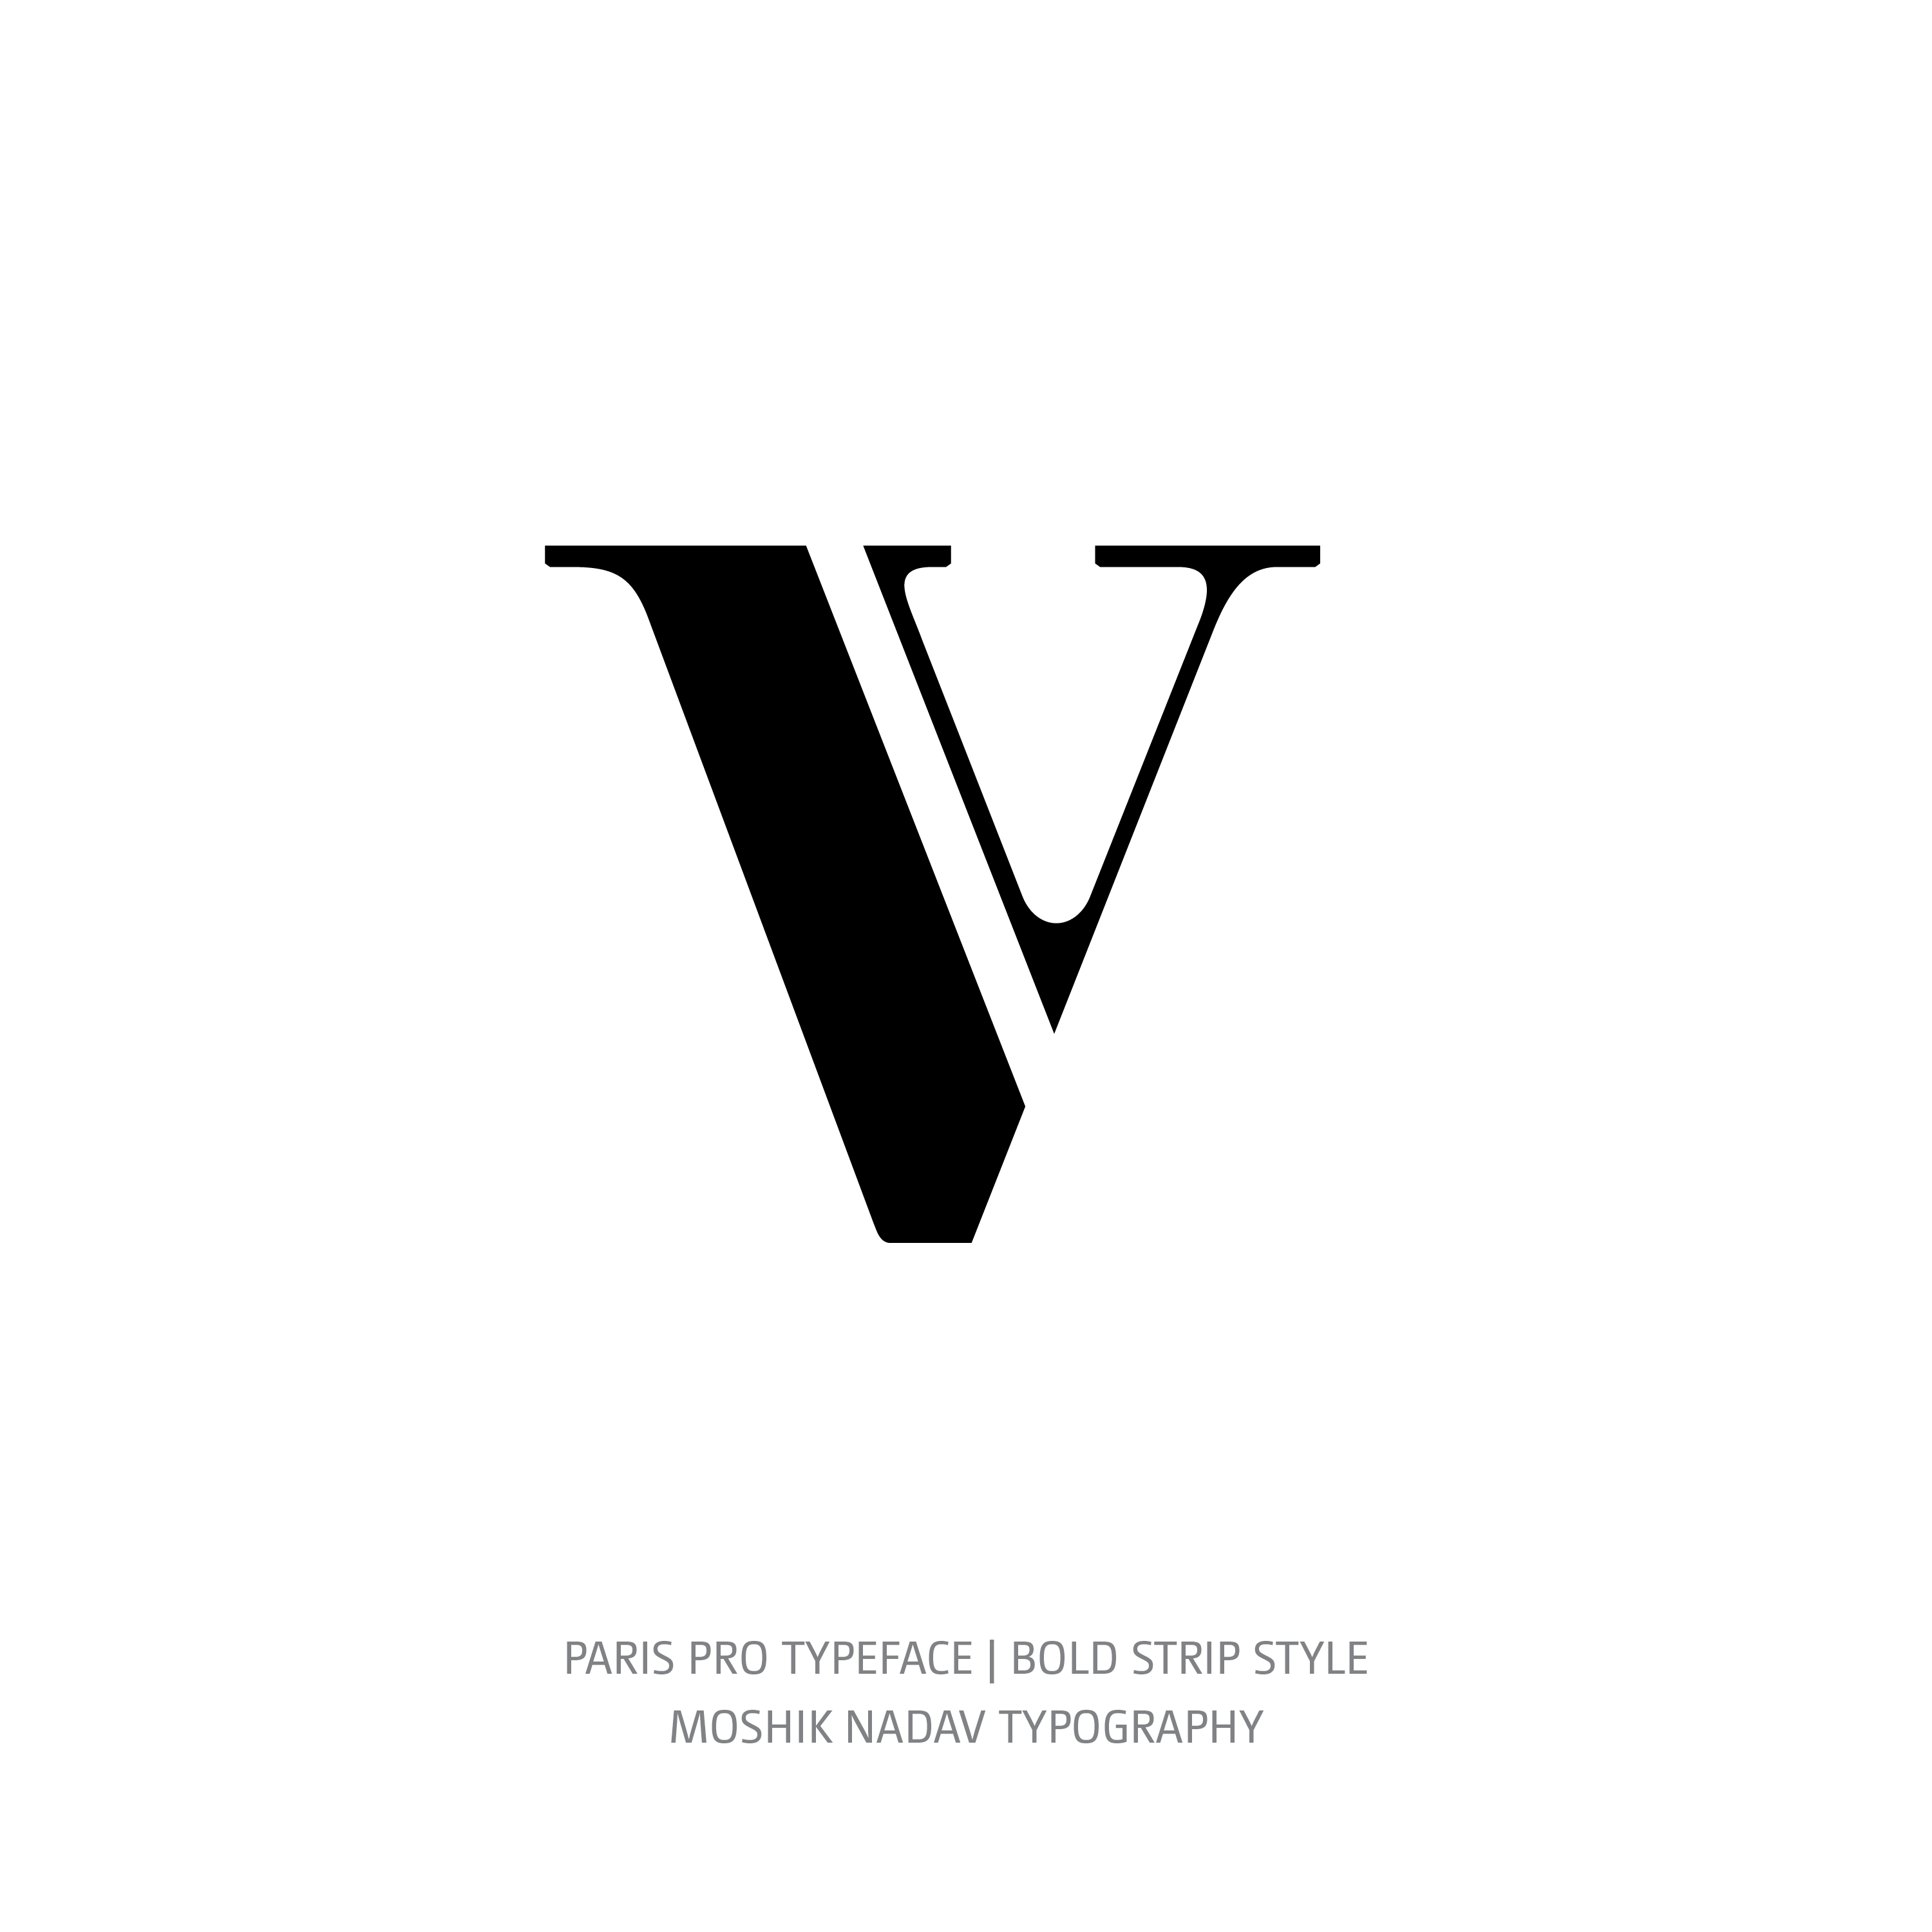 Paris Pro Typeface Bold Strip v